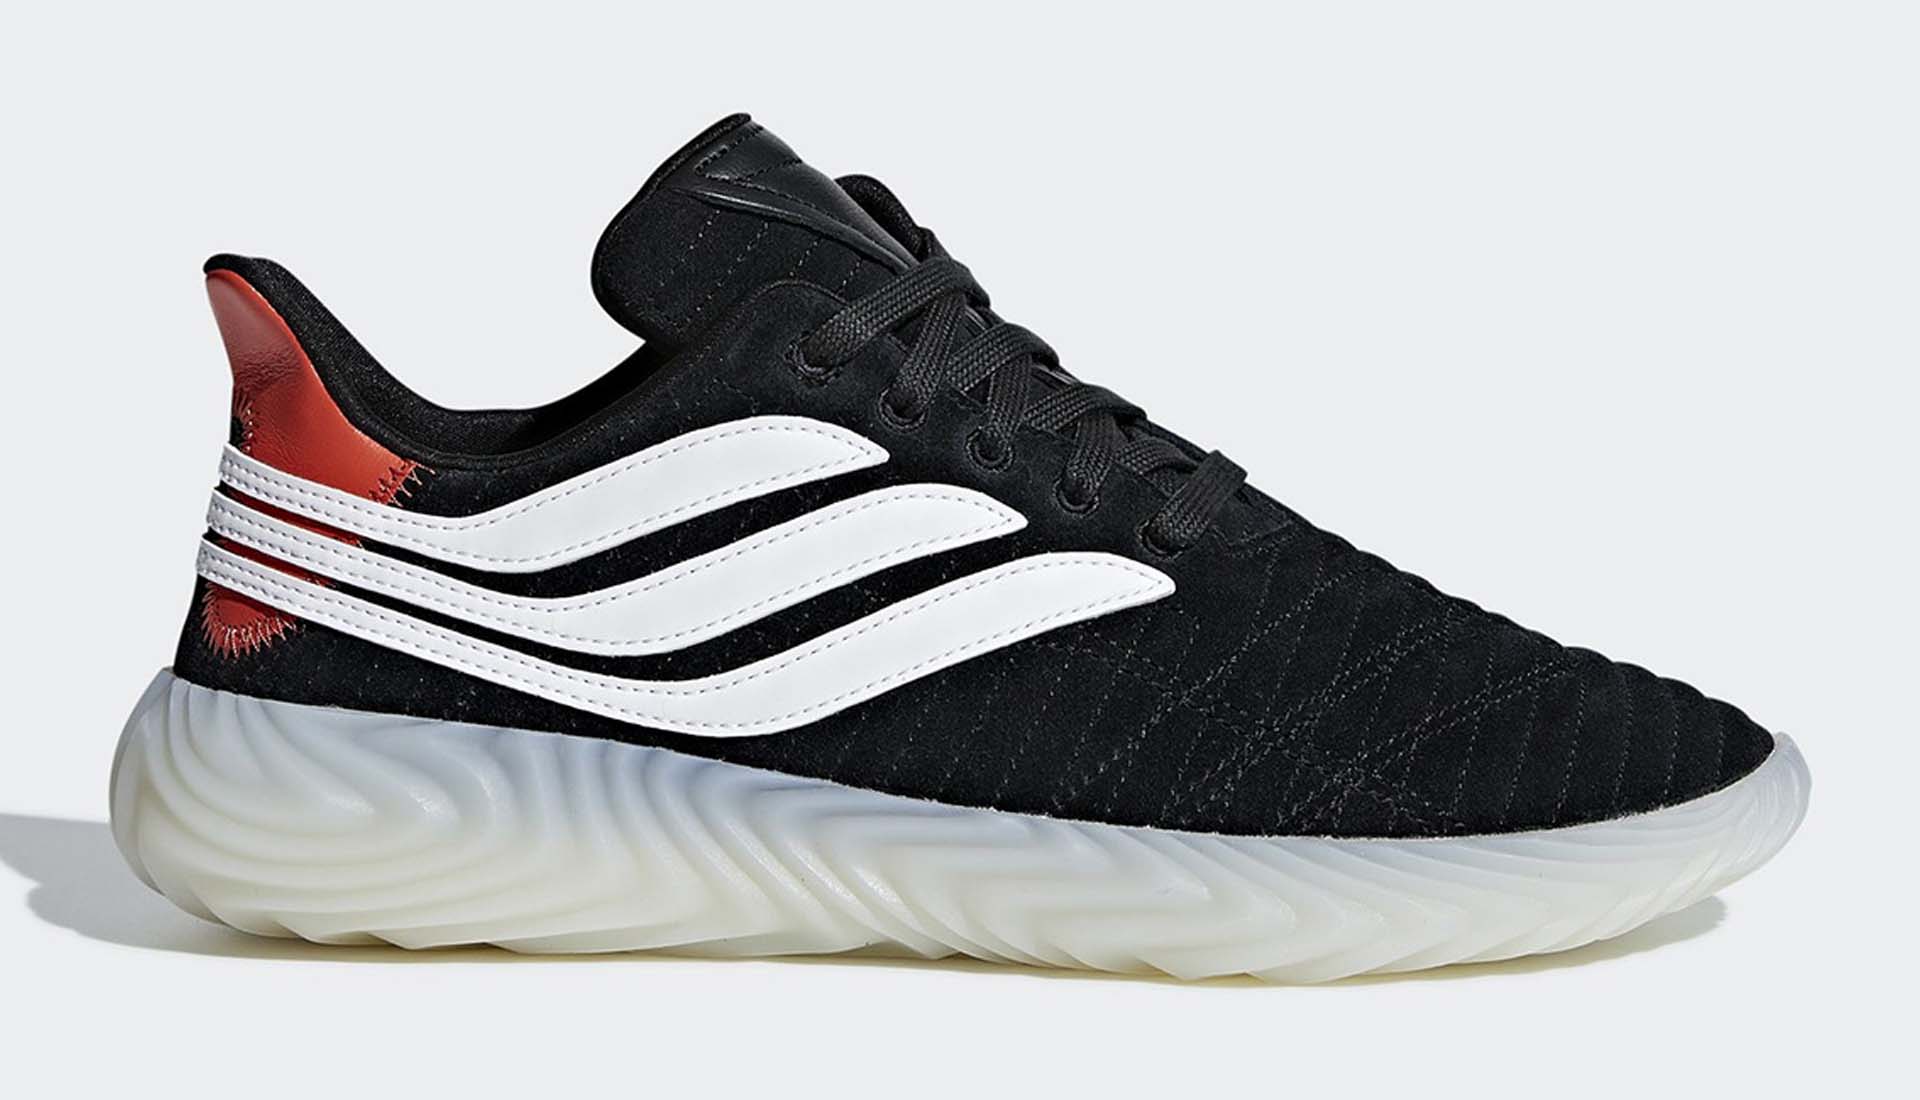 Crack pot Namens laag Zwarte adidas Sobakov schoenen in stijl Predator voetbalschoenen -  Voetbalshirts.com